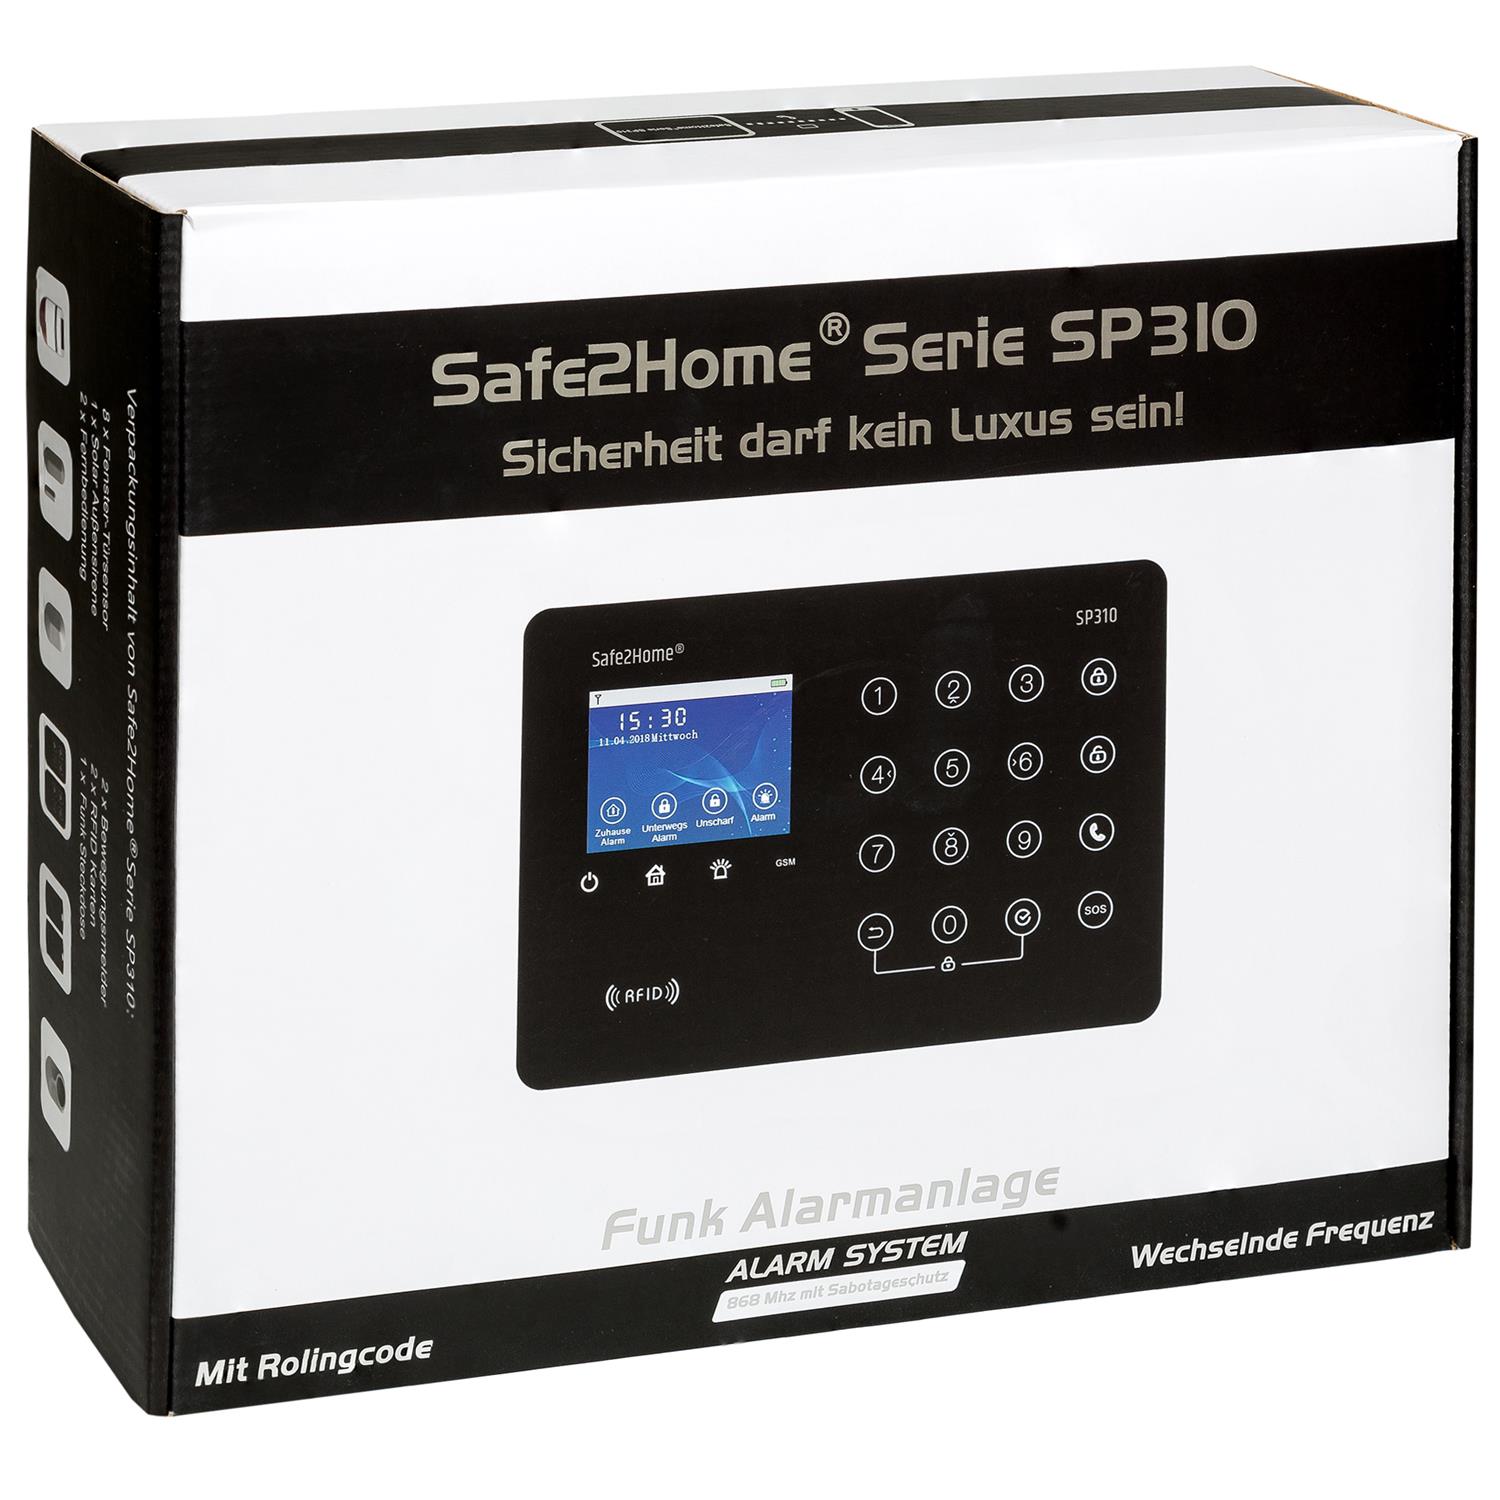 Safe2Home SP310